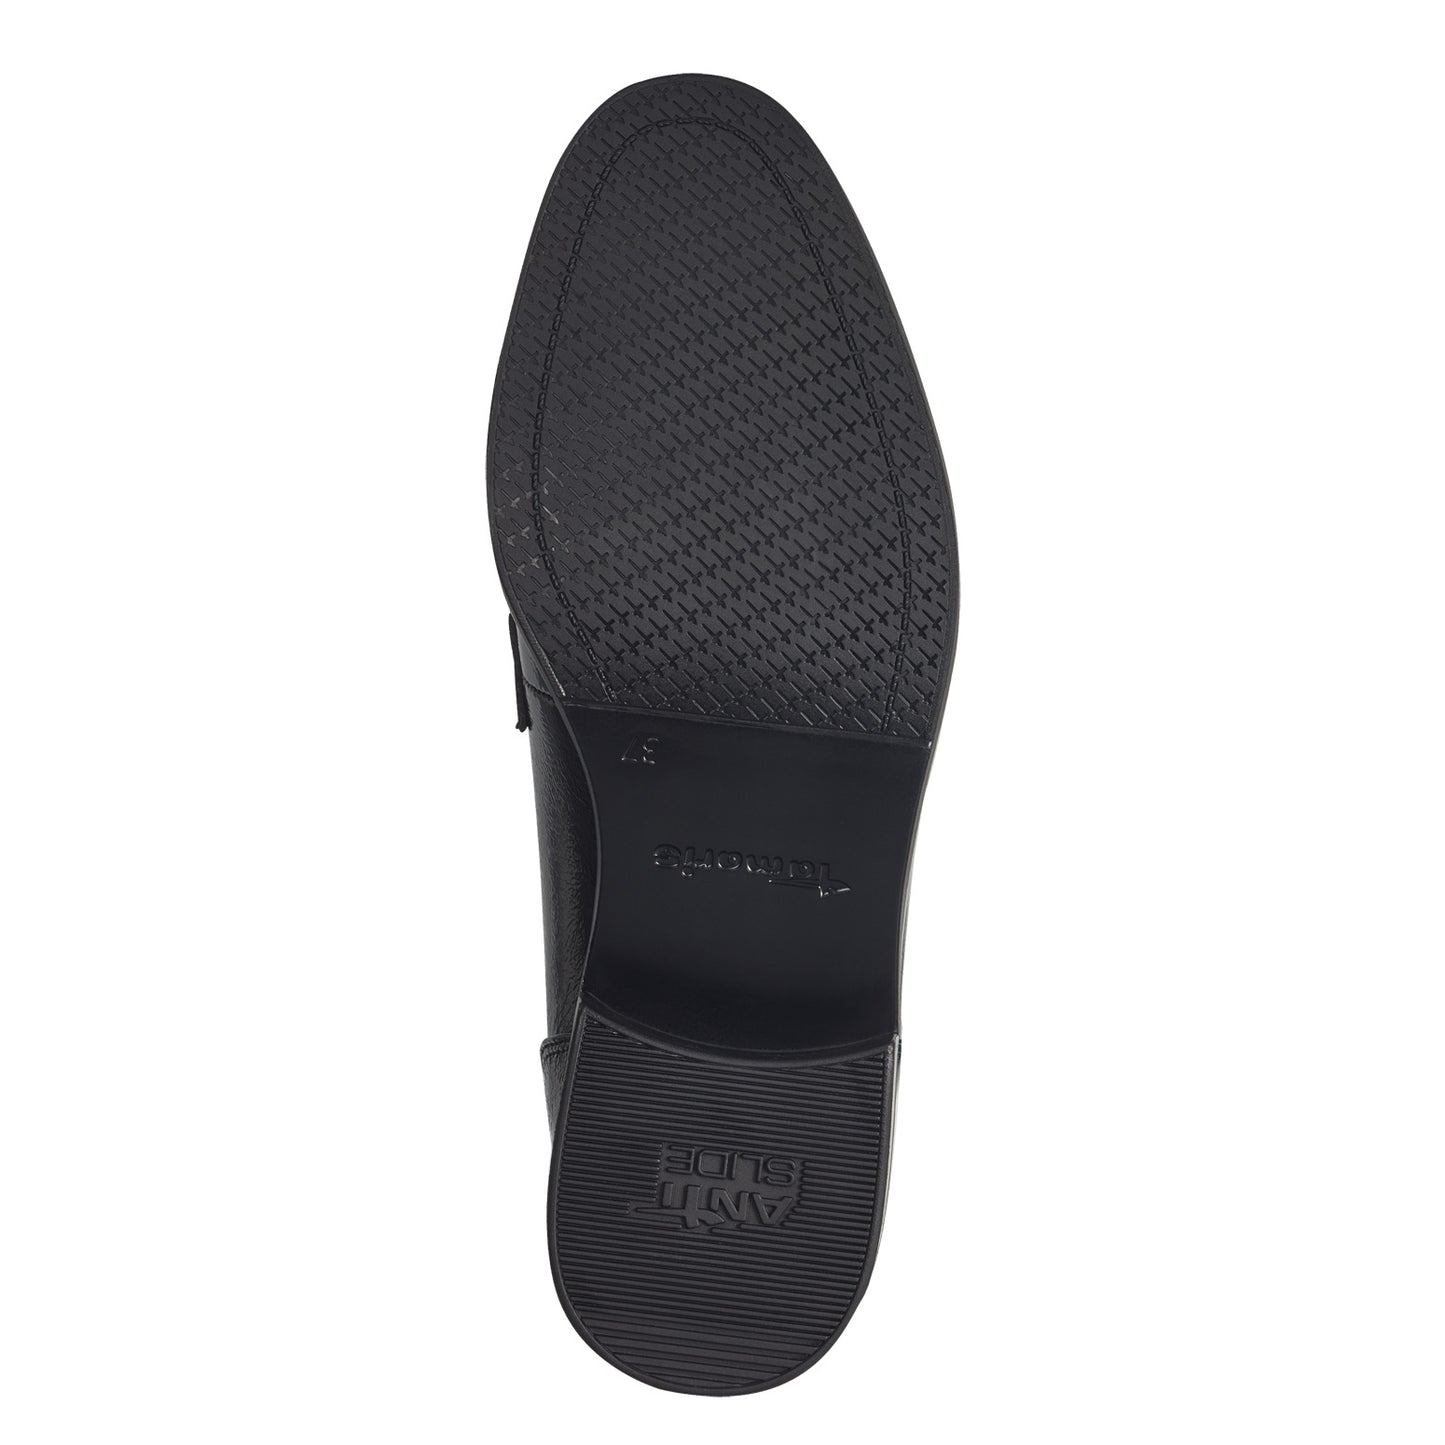 Tamaris 1-24301-41 018 Black Patent Casual Shoes